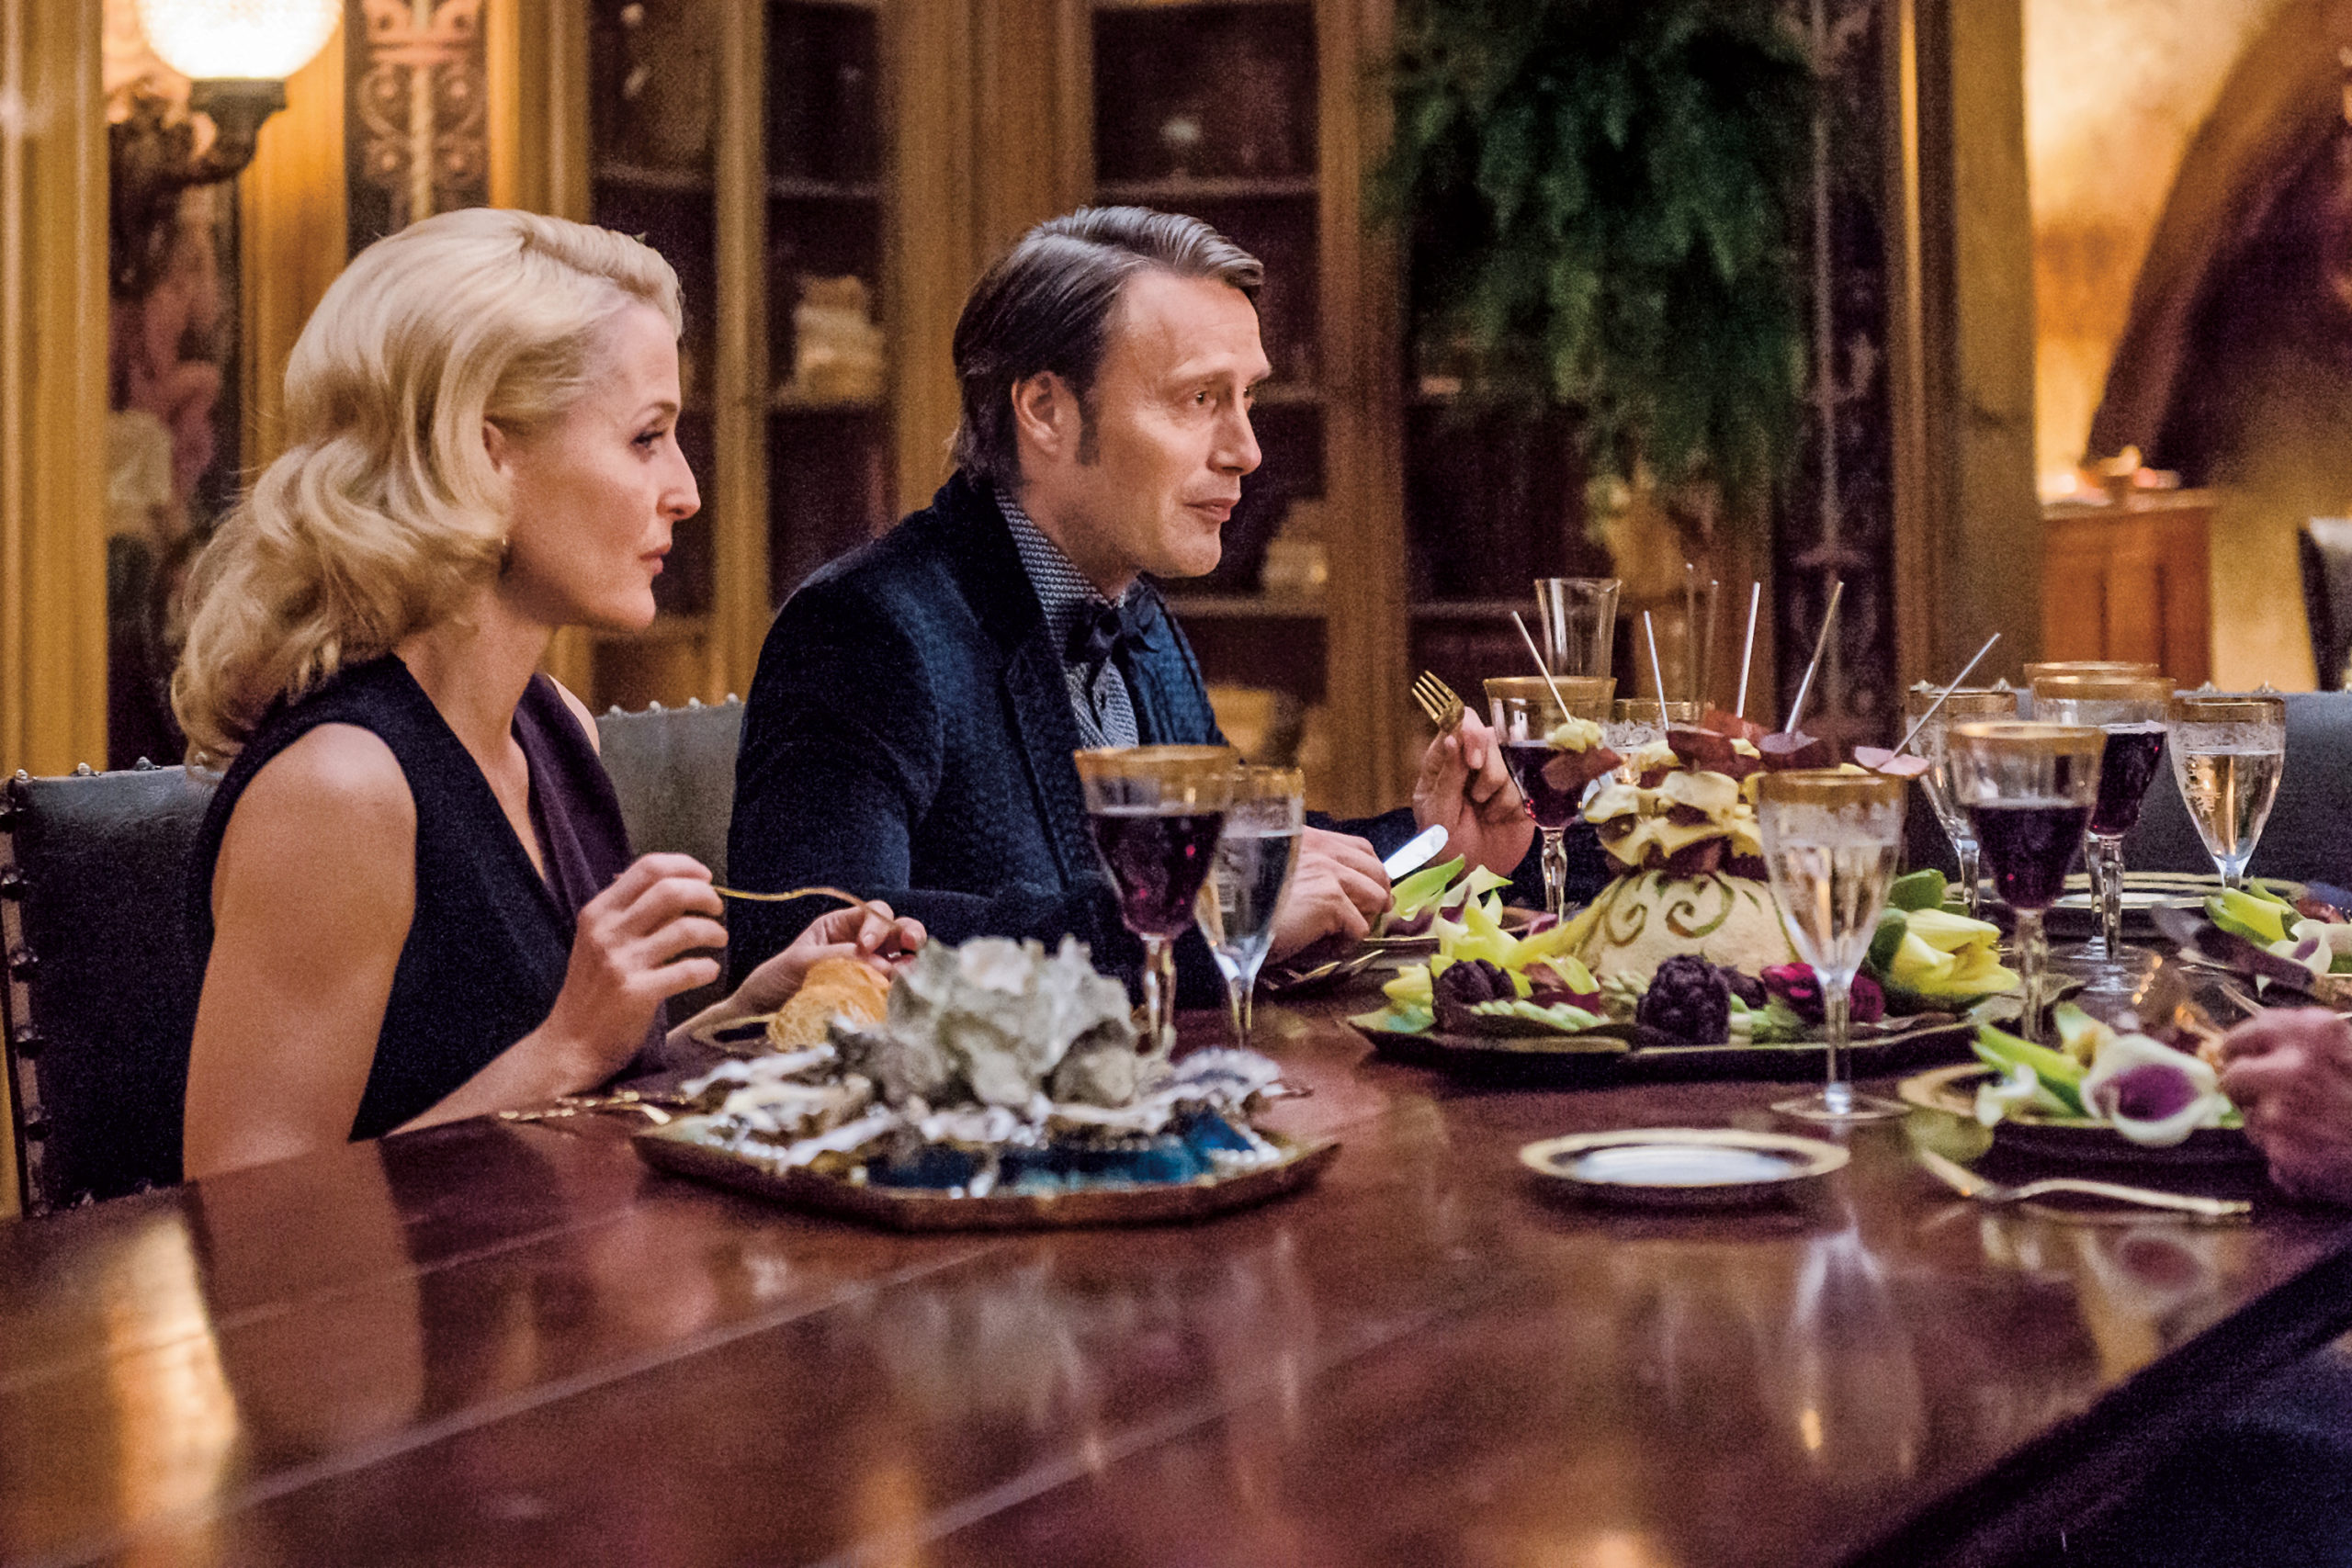 Hannibal - 'Secondo' - Gillian Anderson as Bedelia Du Maurier, Mads Mikkelsen as Hannibal Lecter